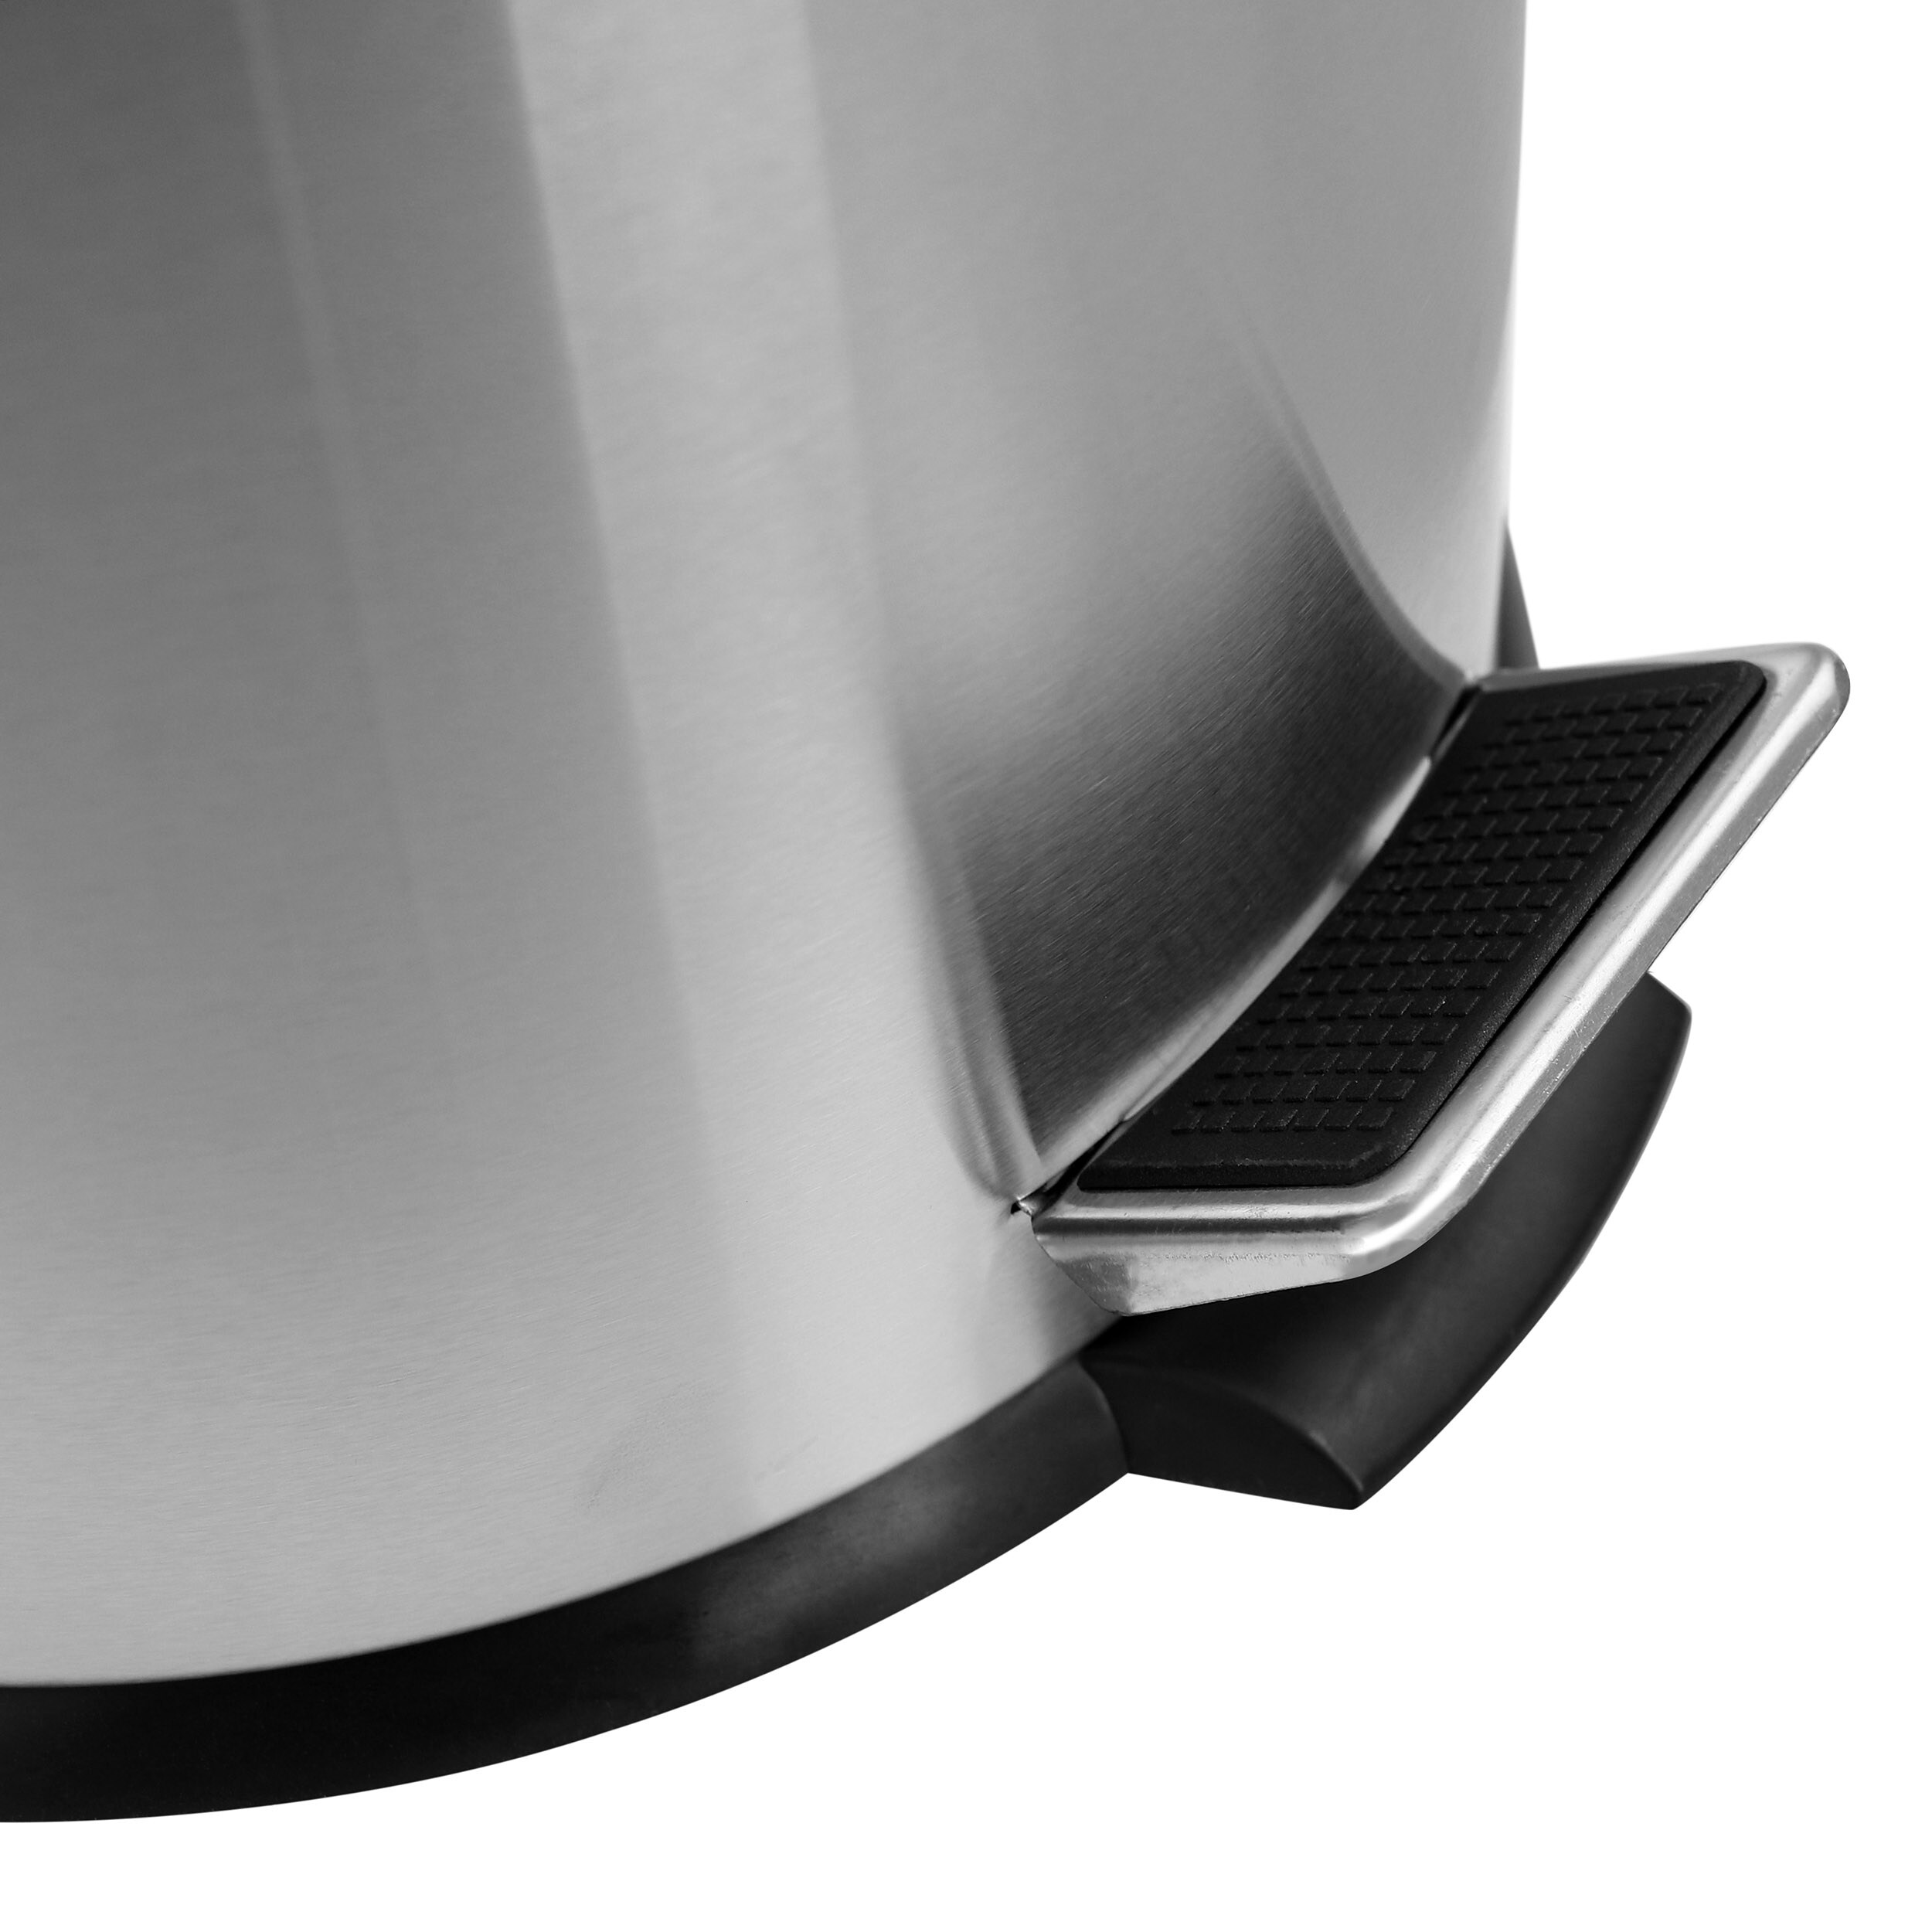 Elama 30-Liter/7.9-Gallon Soft Pedal Cylindrical Trash Can ,Silver